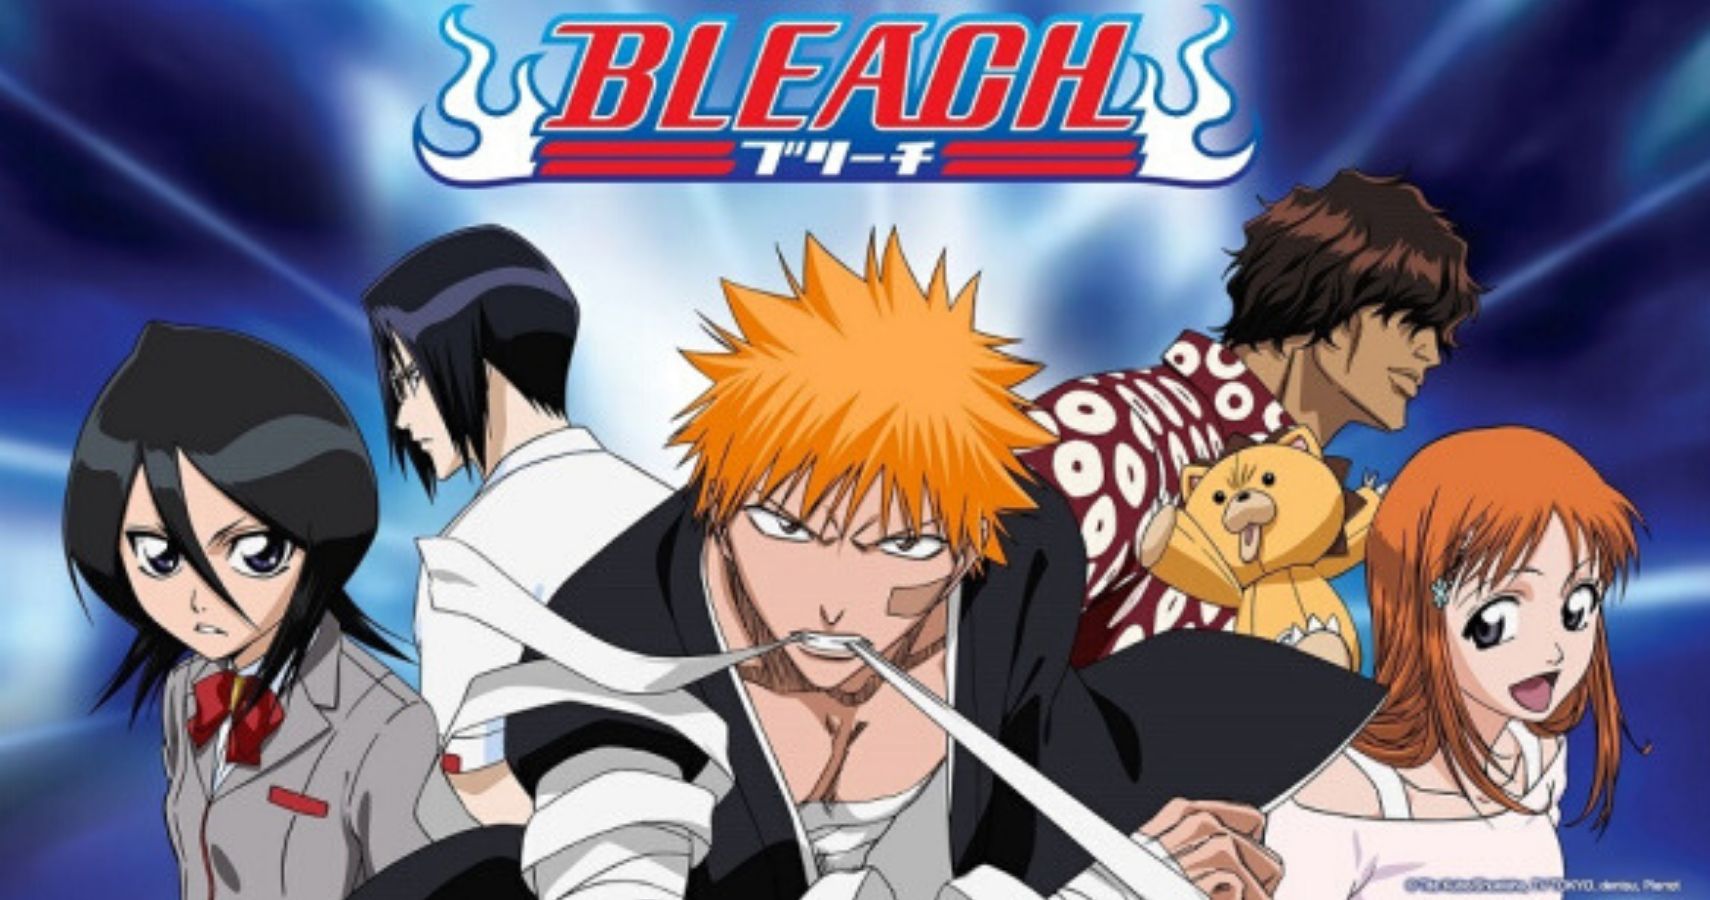 Bleach season 1 The Day I Became a Shinigami - Metacritic